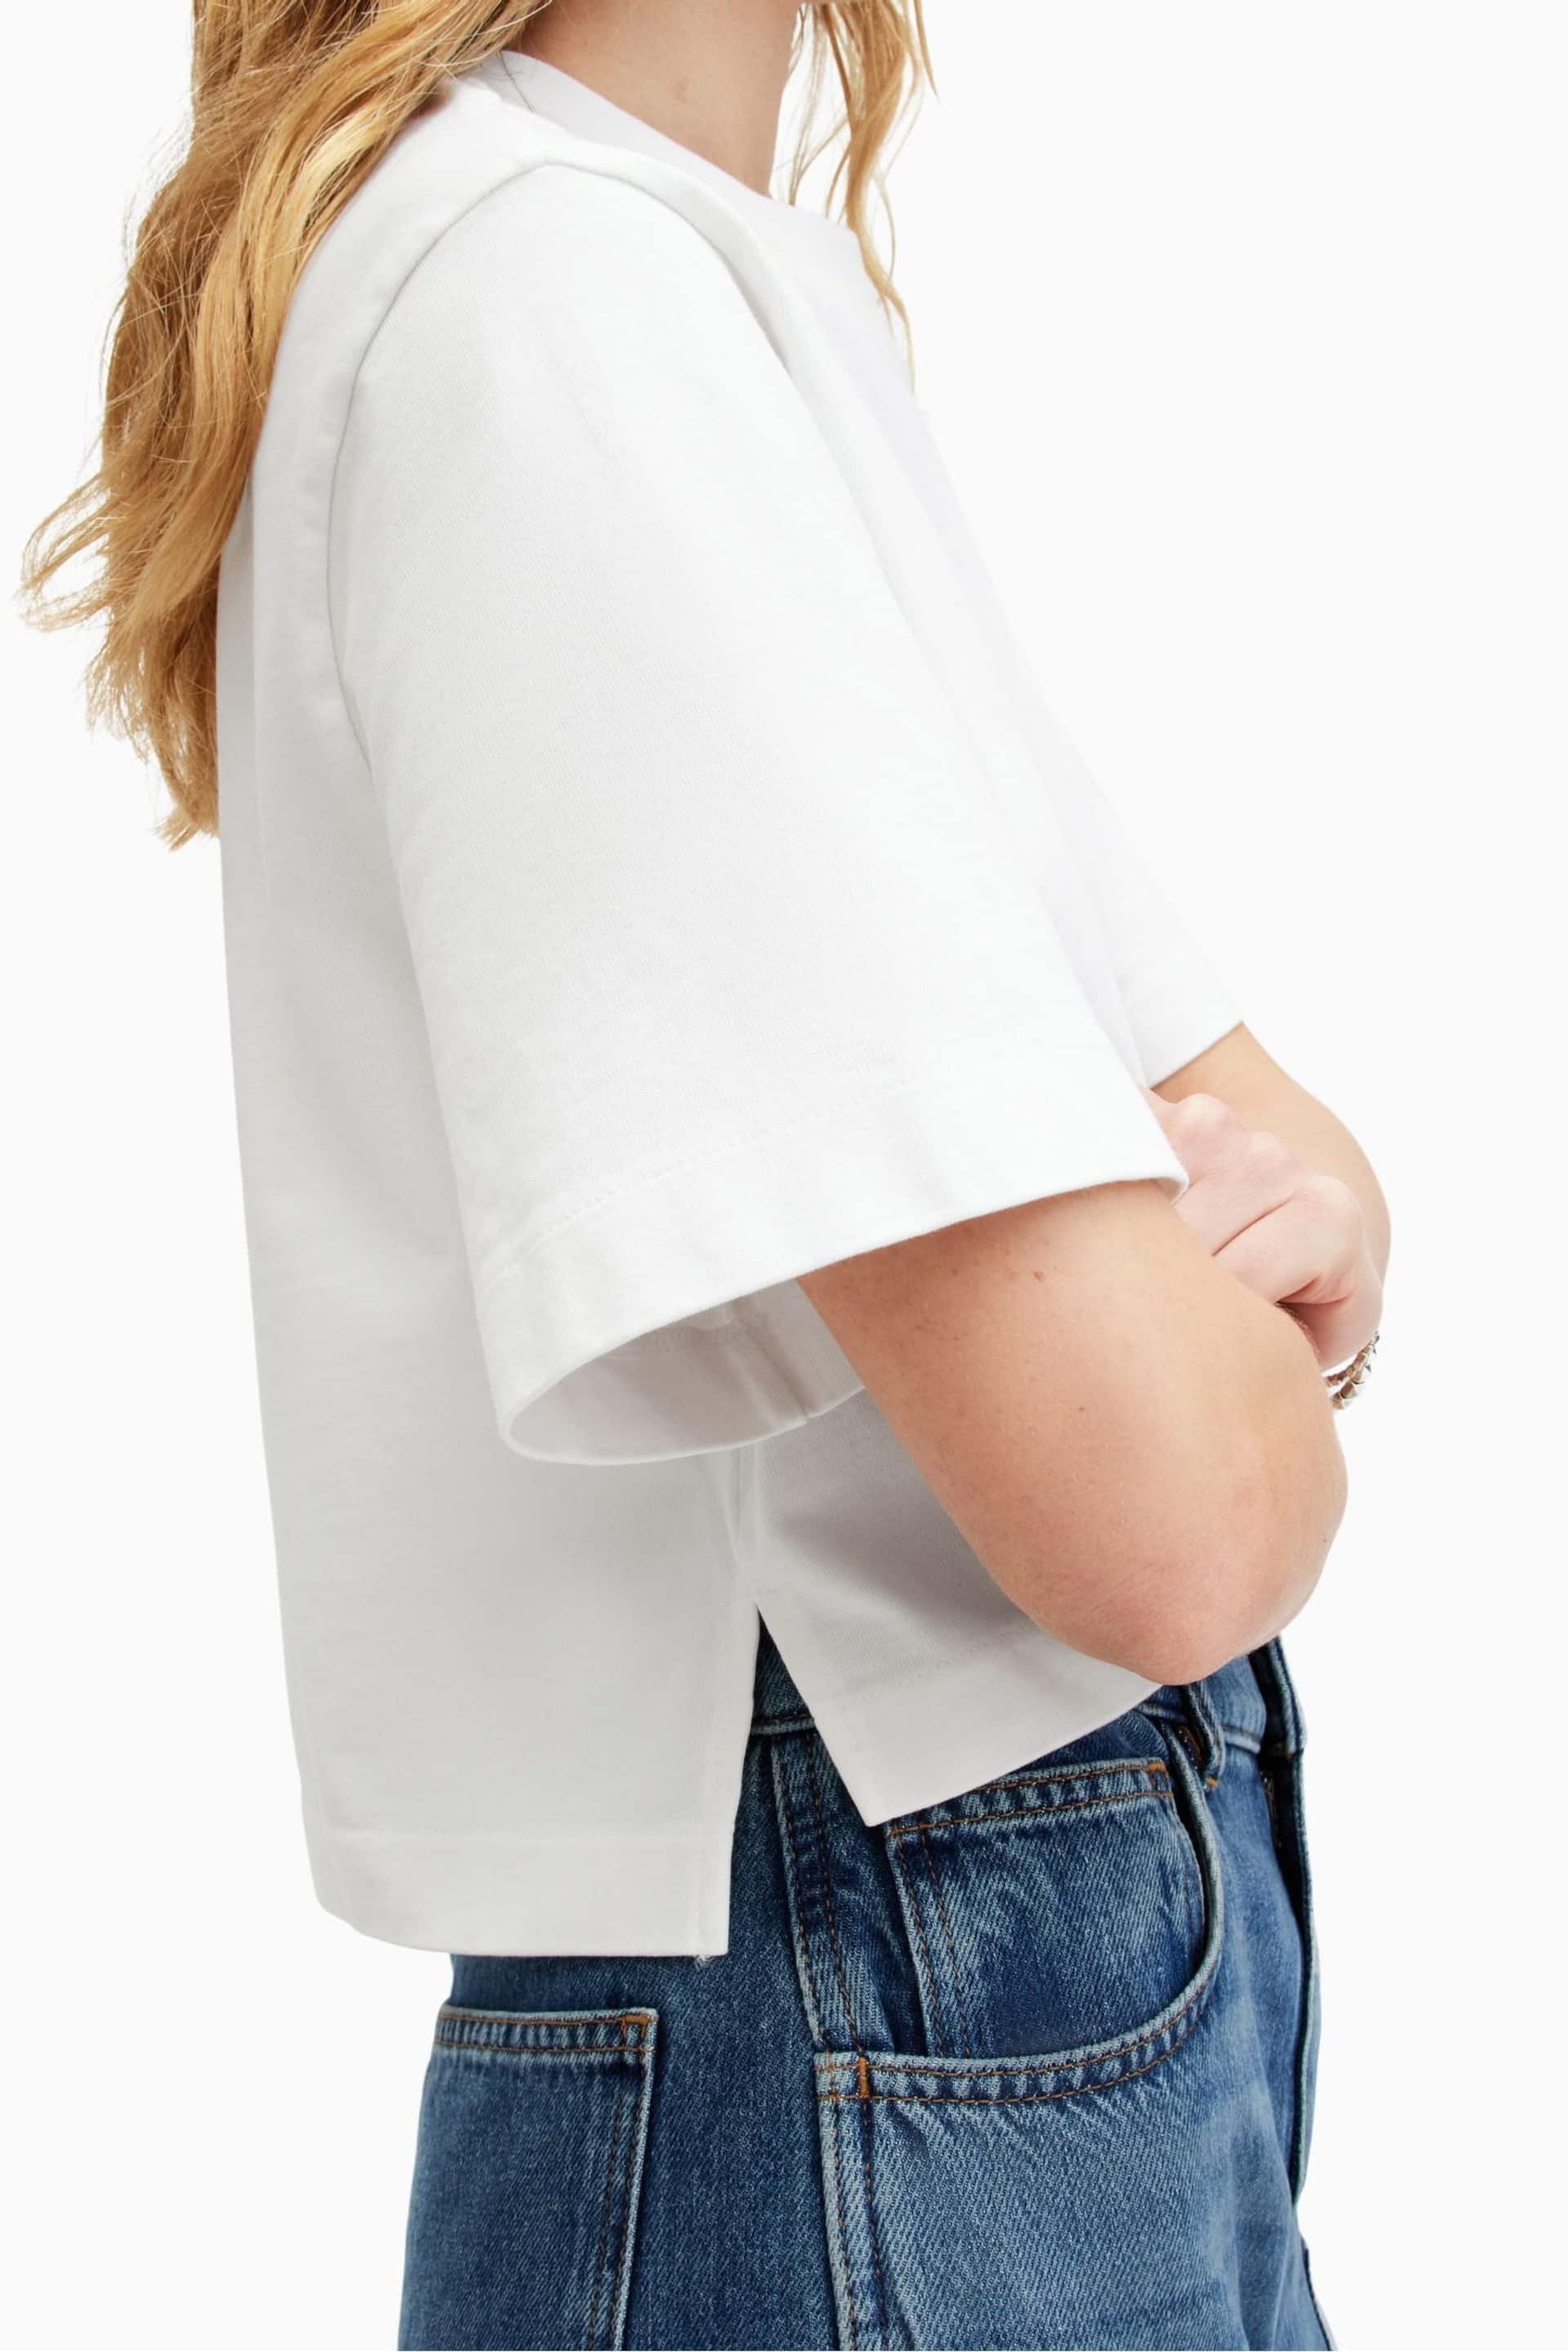 AllSaints White Lottie T-Shirt - Image 4 of 7